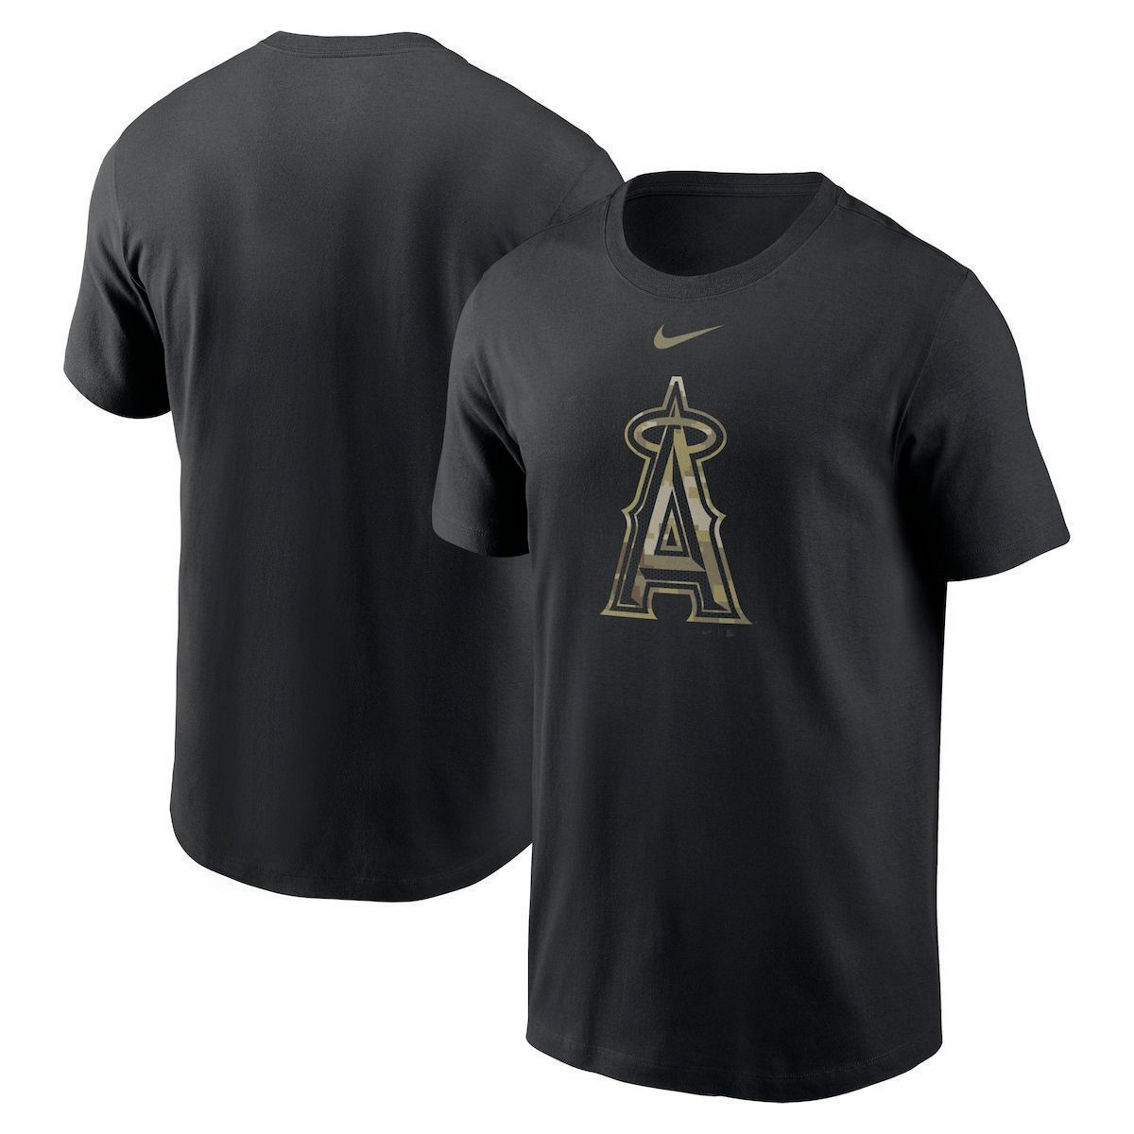 Men's Nike Black Los Angeles Angels Camo Logo Team T-Shirt